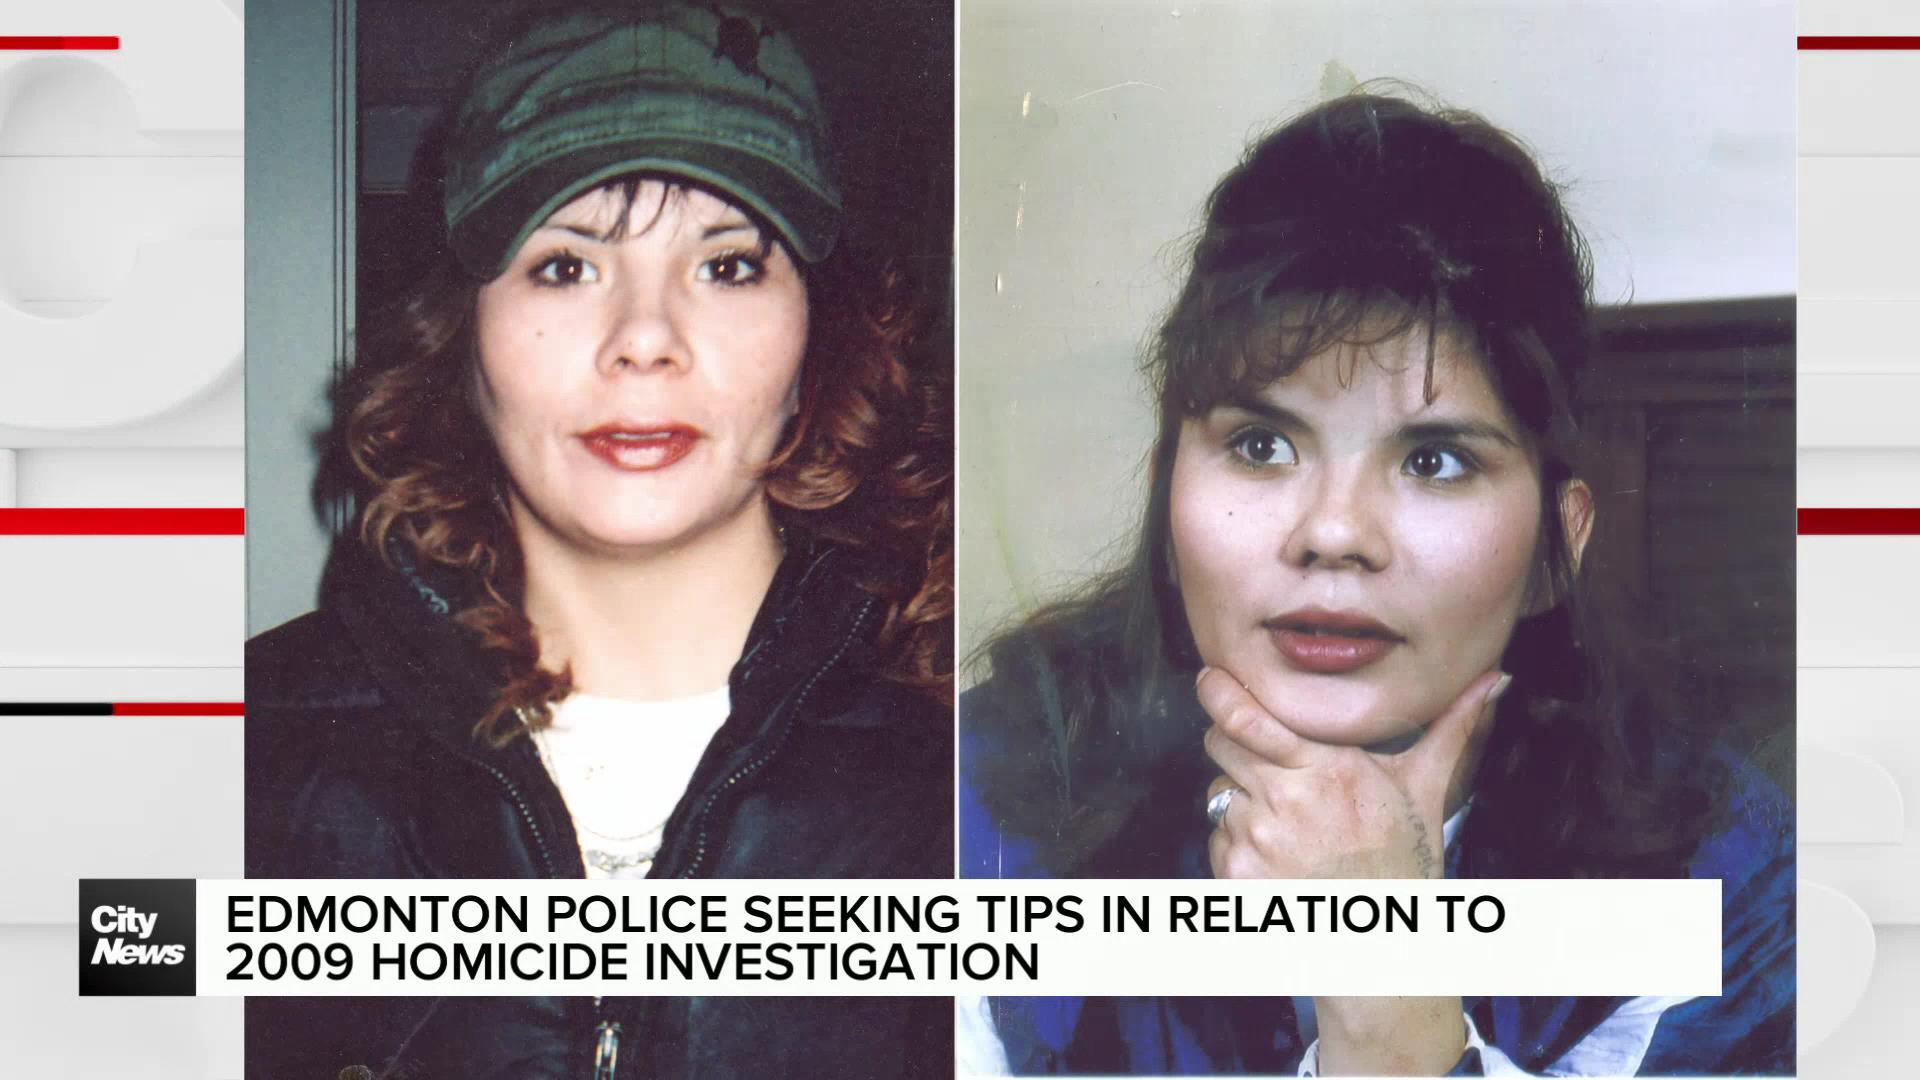 Edmonton police seeking tips in 2009 homicide investigation